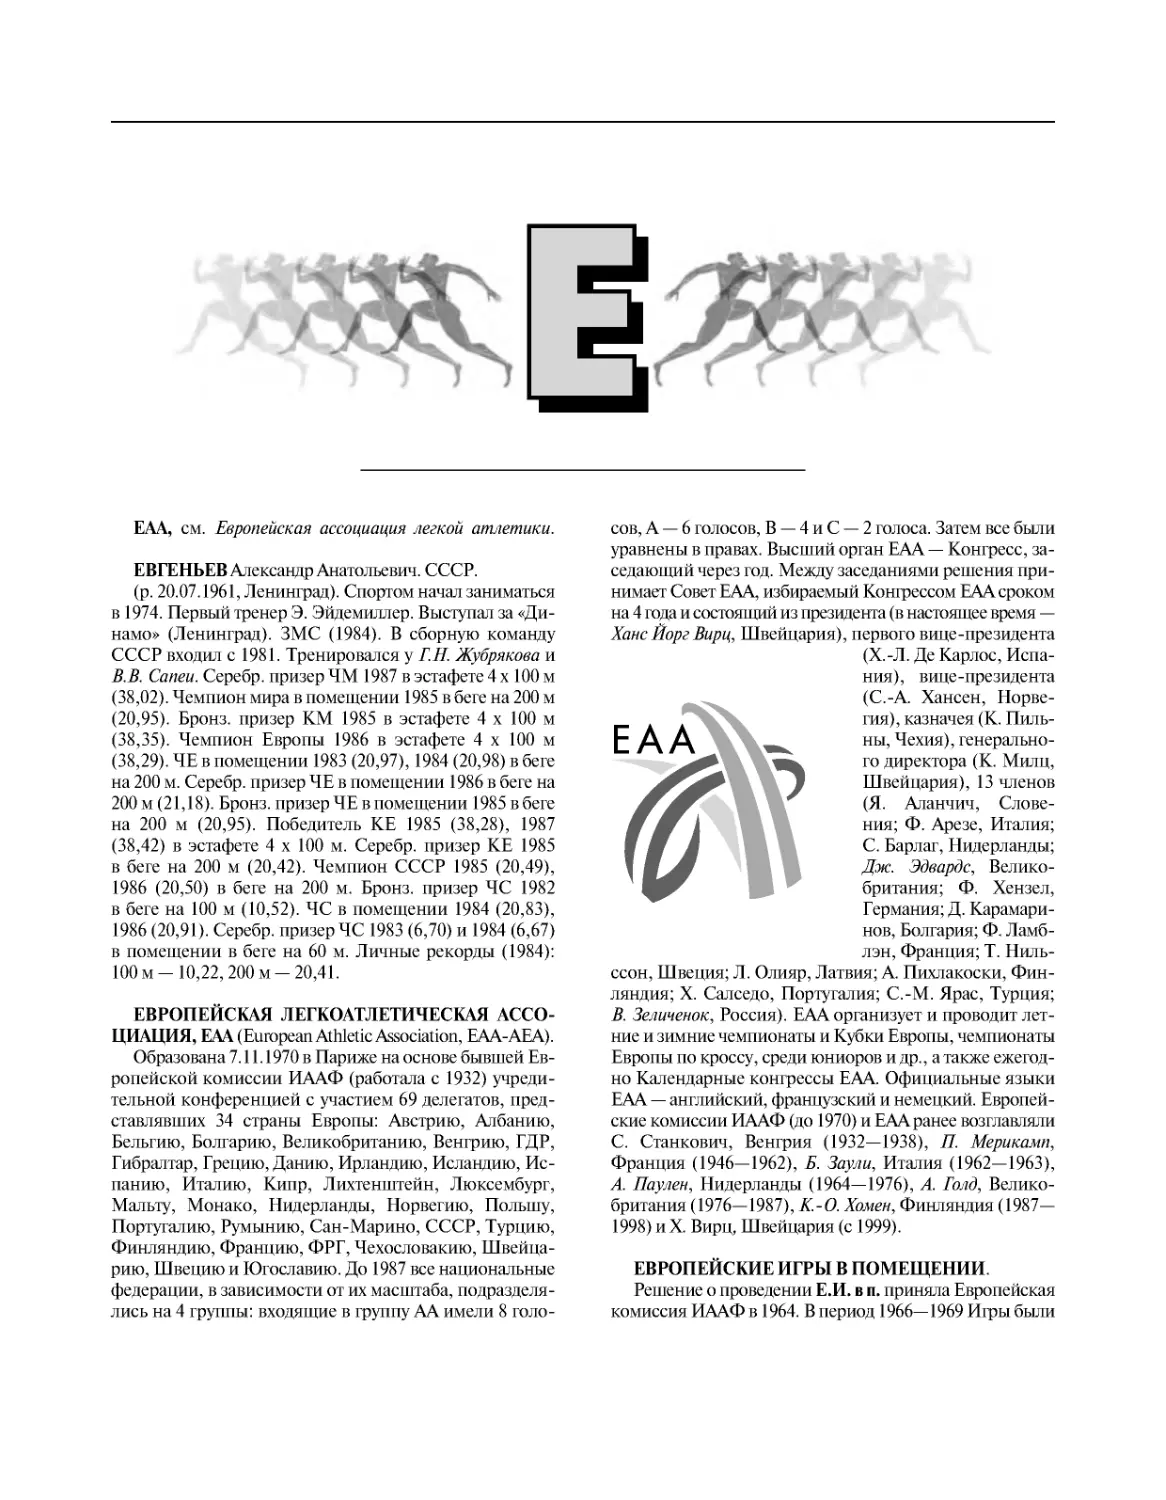 06-E-LAtletika-Pages-259-269